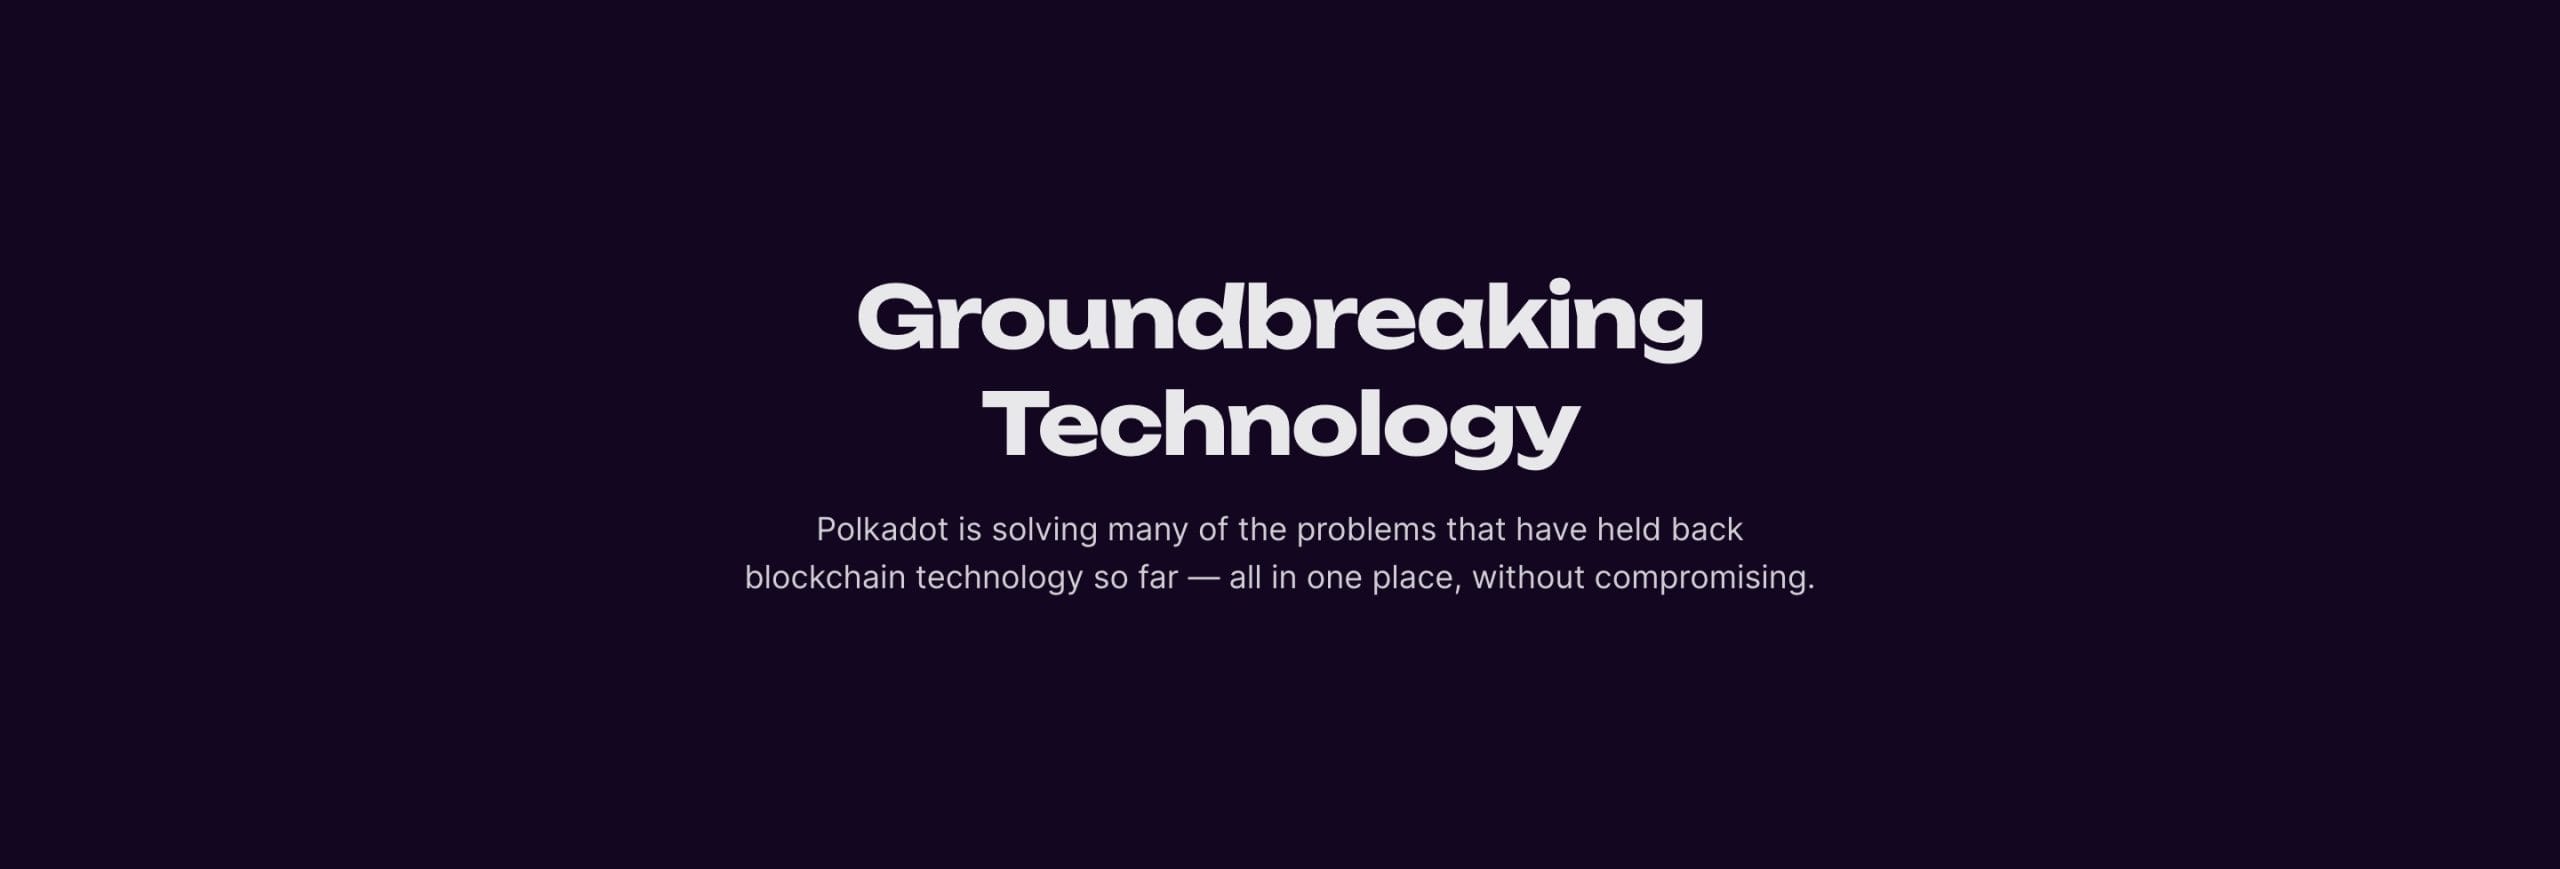 Polkadot Groundbreaking Technology Banner